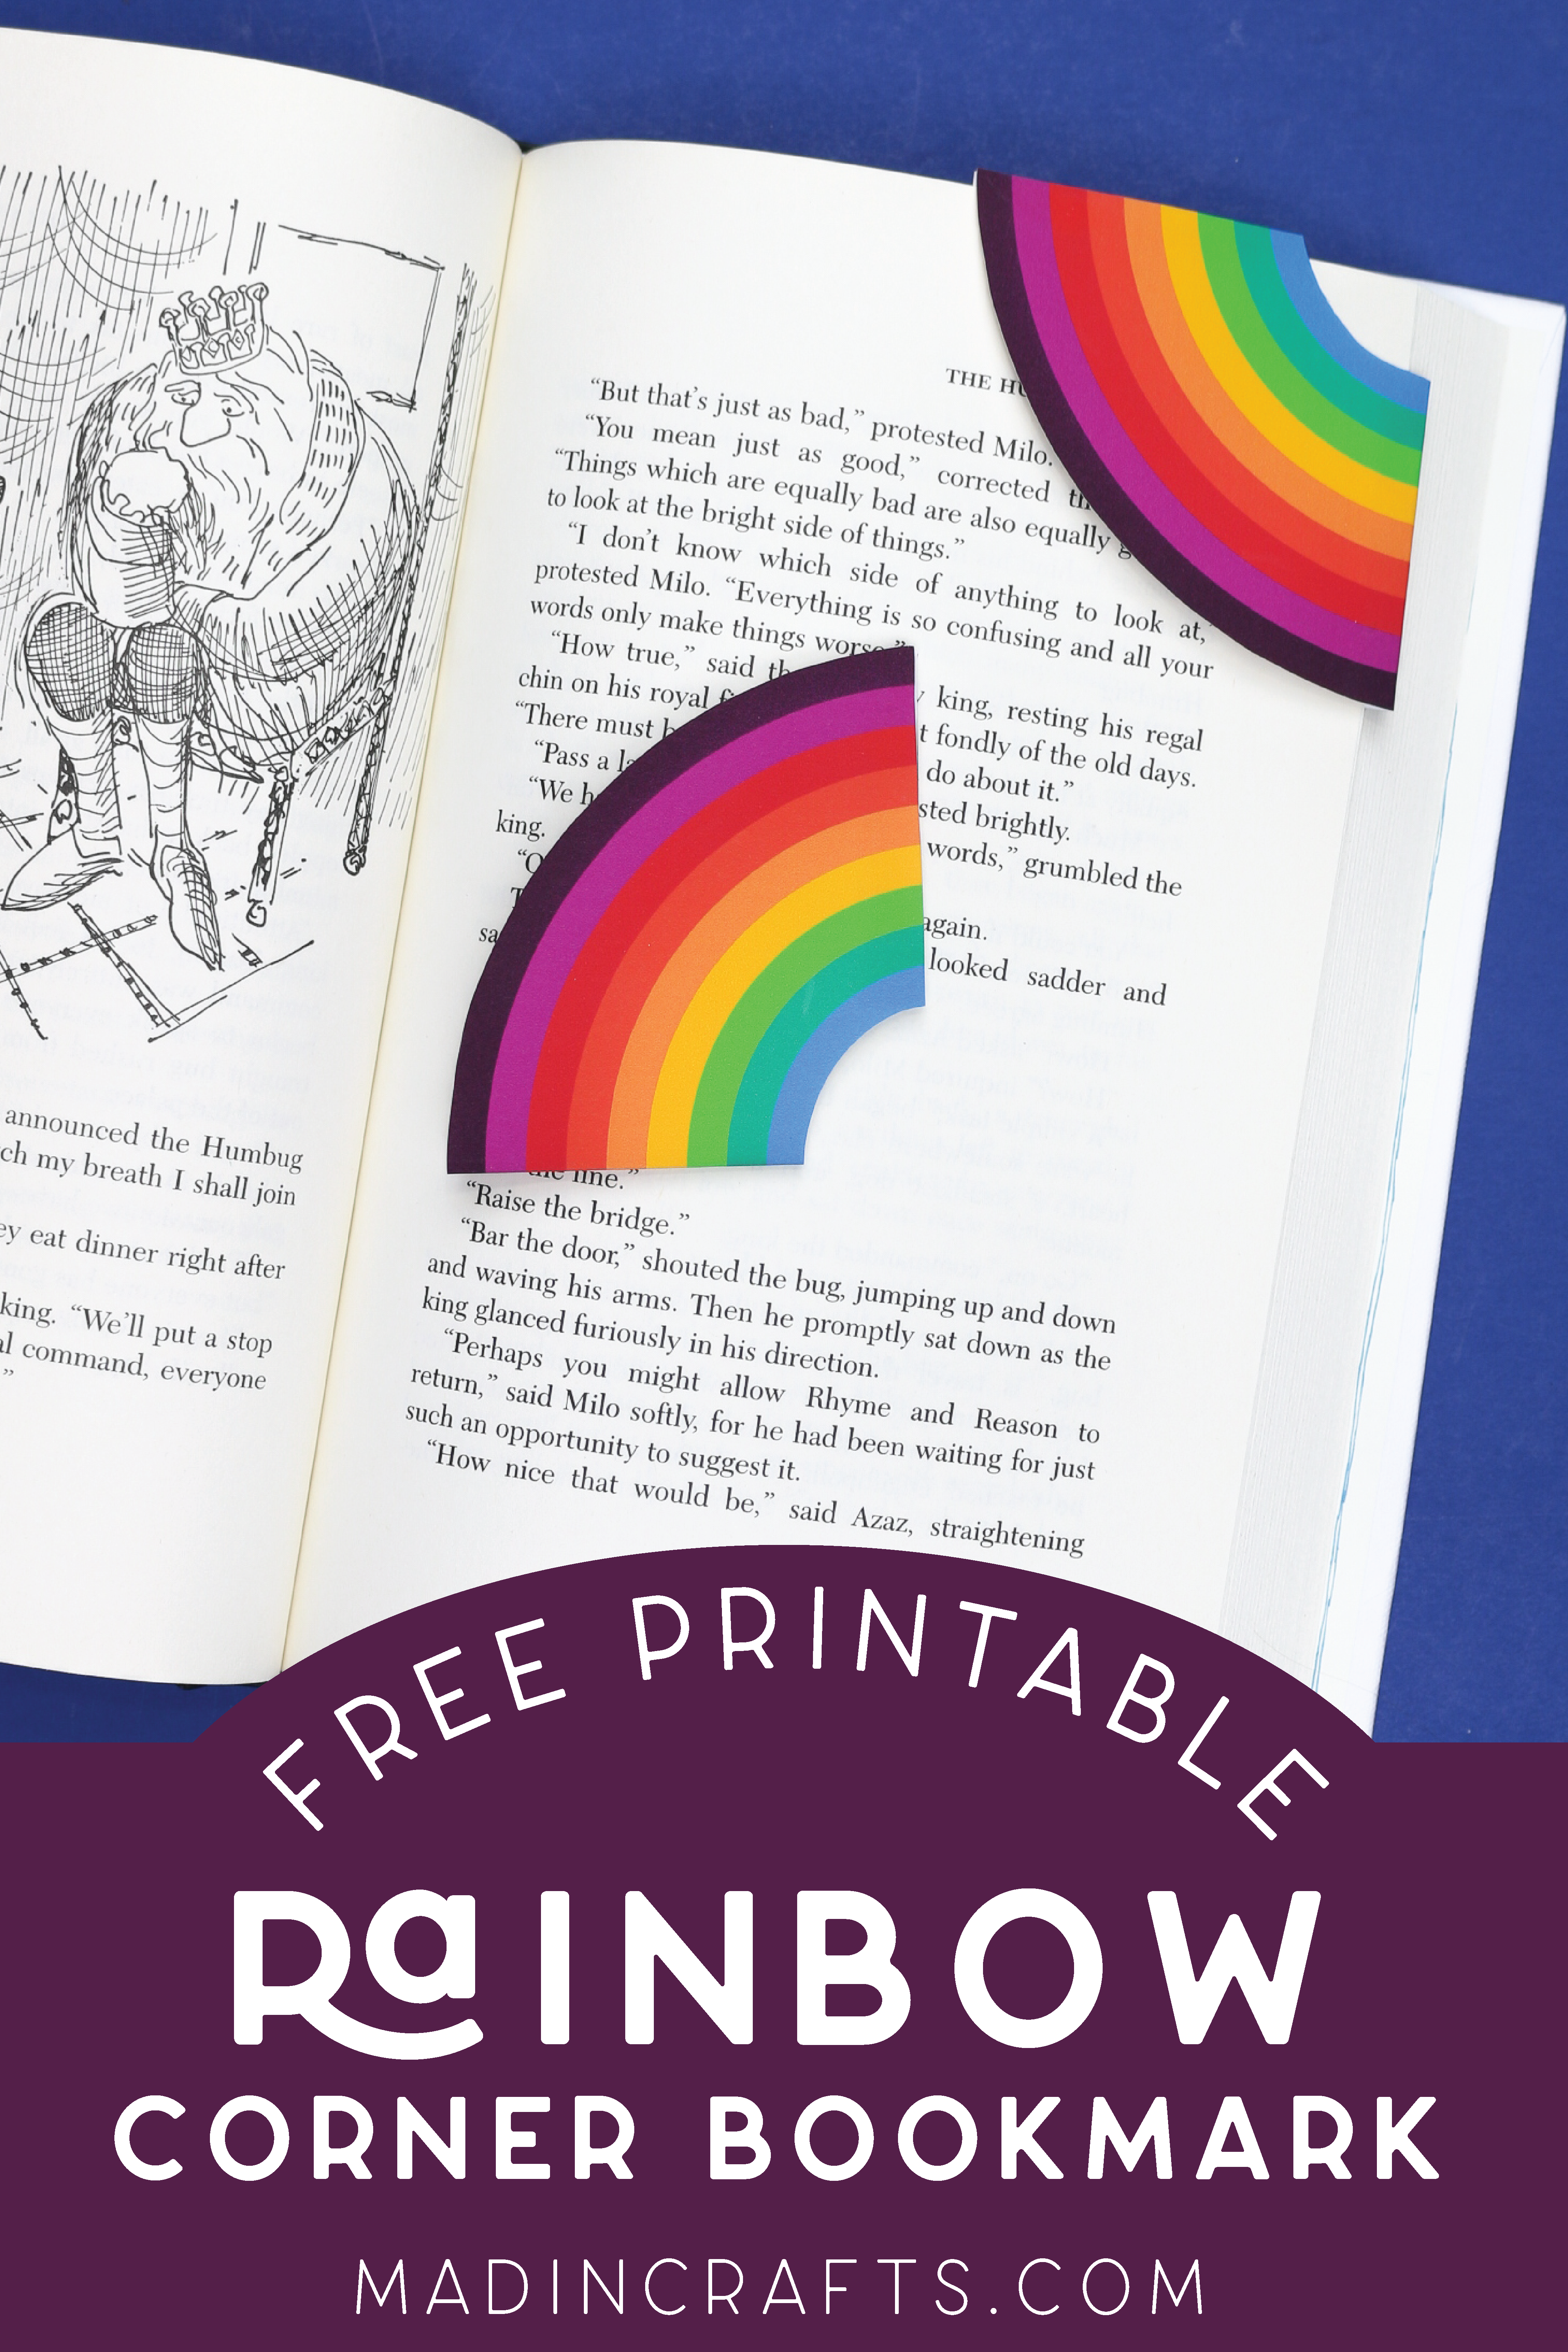 rainbow bookmarks on a book